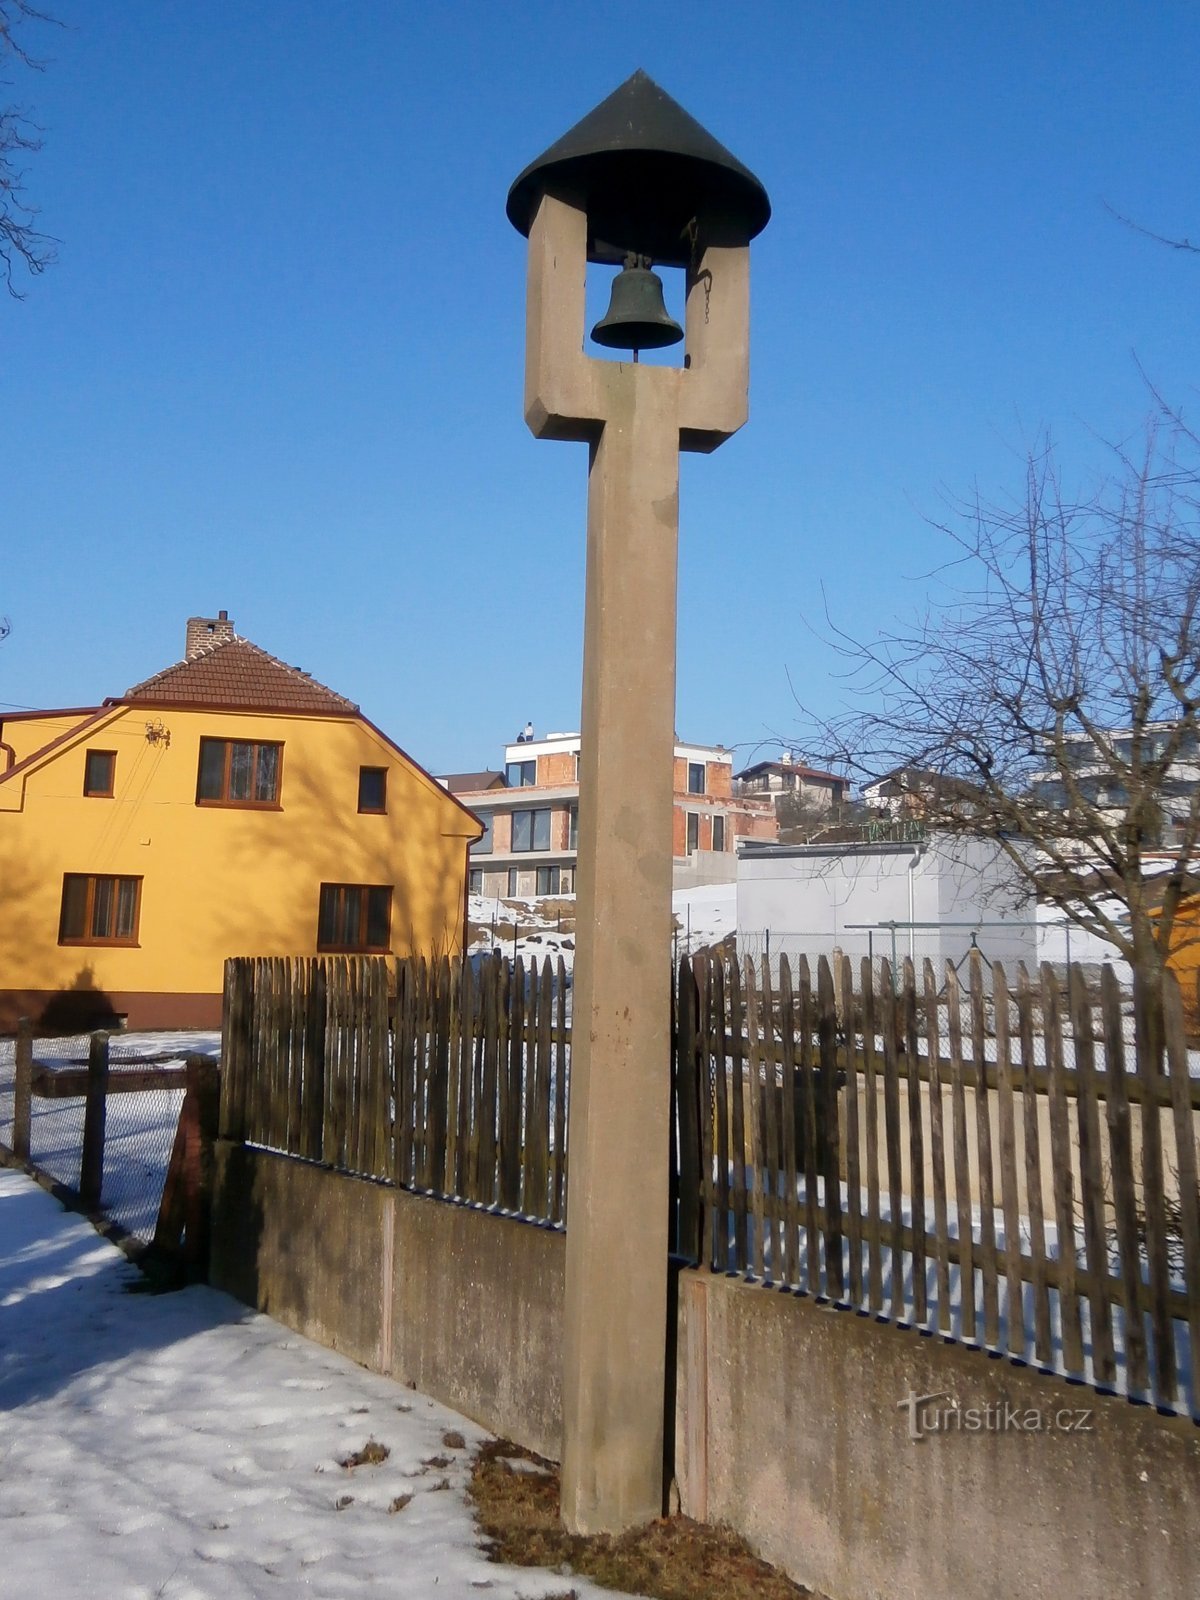 Tháp chuông ở phố Hlavní (Hradec Králové, 14.2.2017/XNUMX/XNUMX)